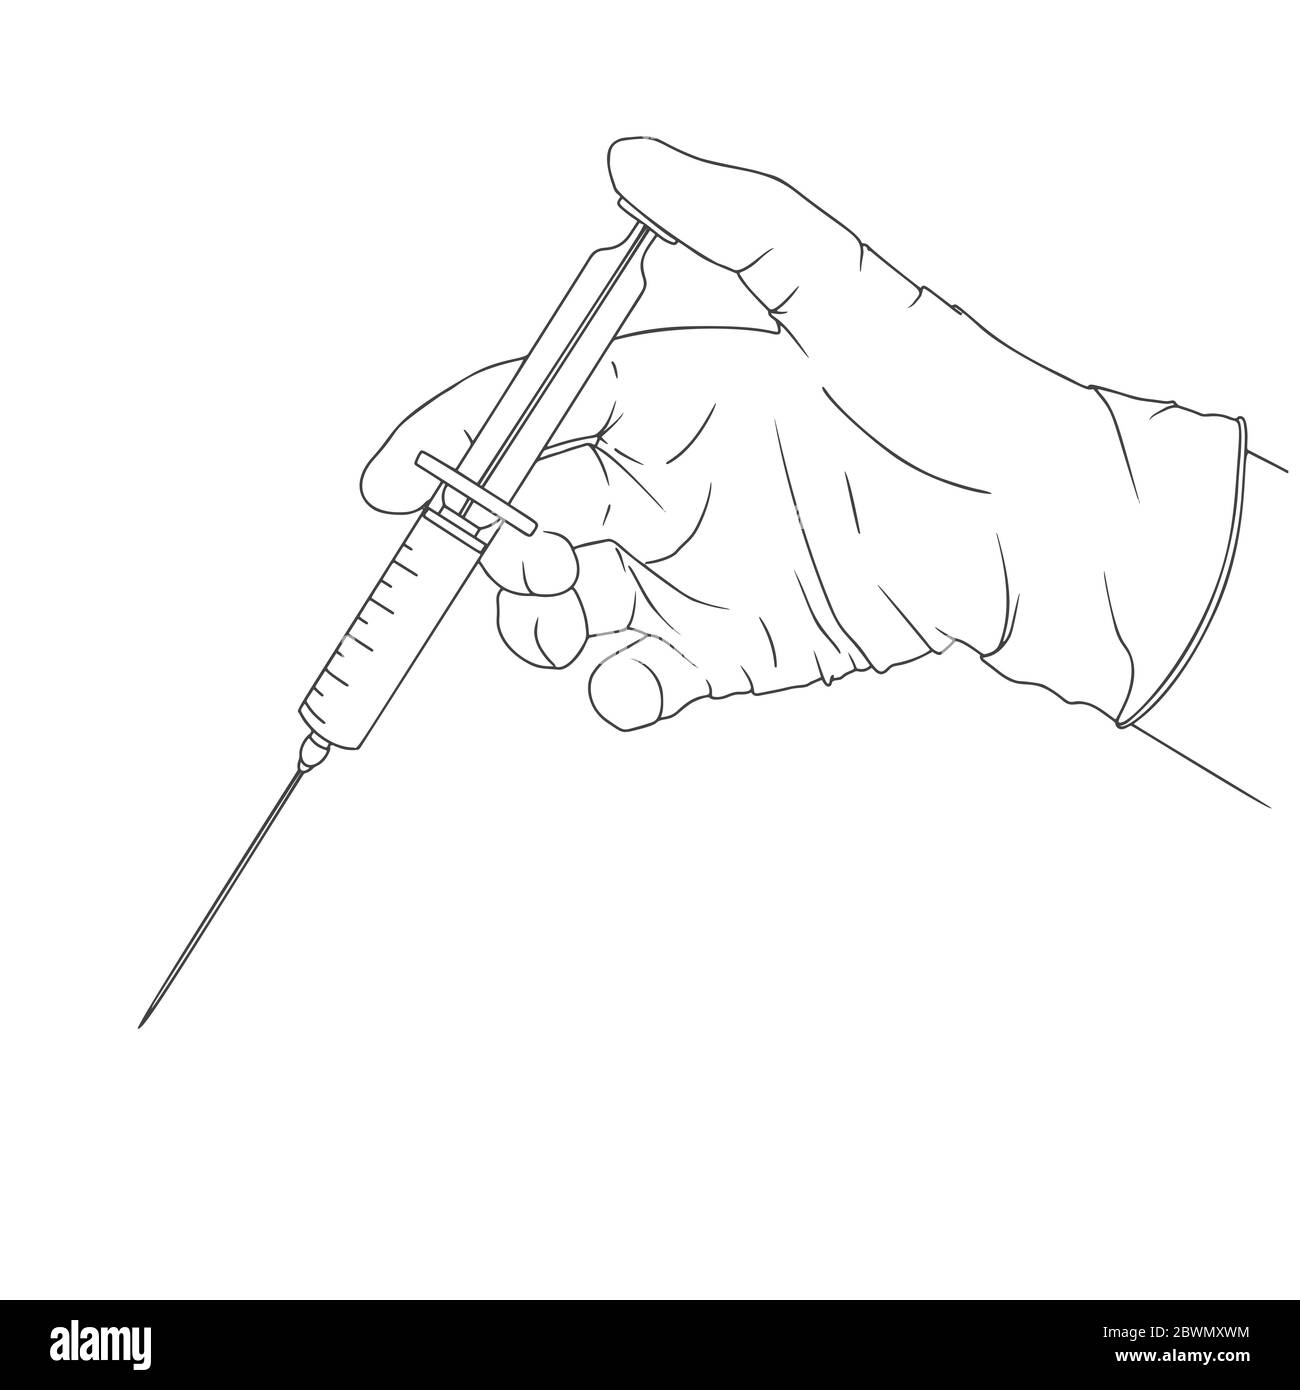 Doctor or scientist hands in latex gloves. Hands in sterile gloves holding syringe. Vector illustration in sketch style. Stock Vector